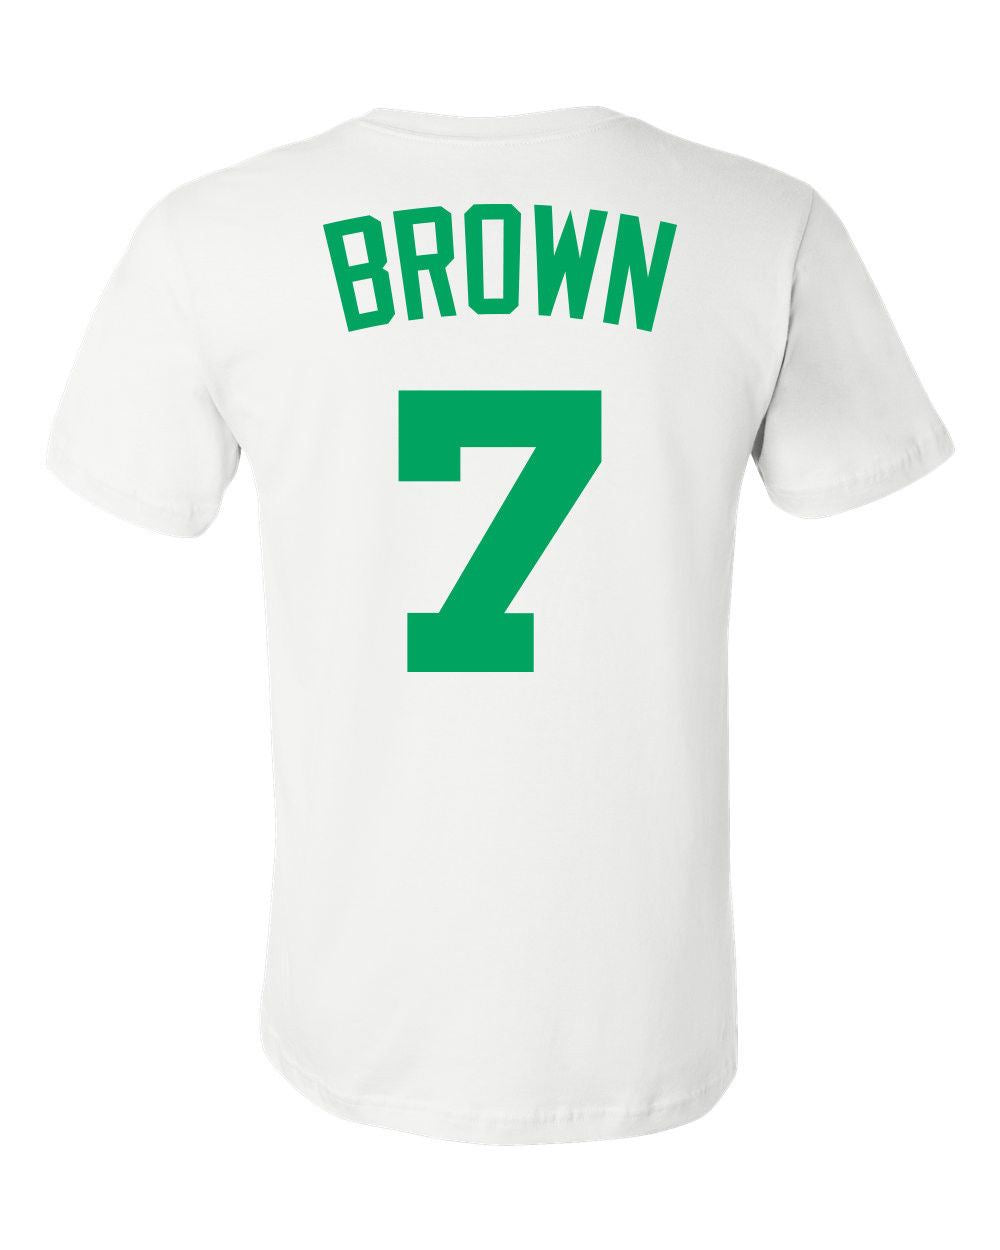 Jaylen Brown #7 Boston Celtics Jersey Team Shirt